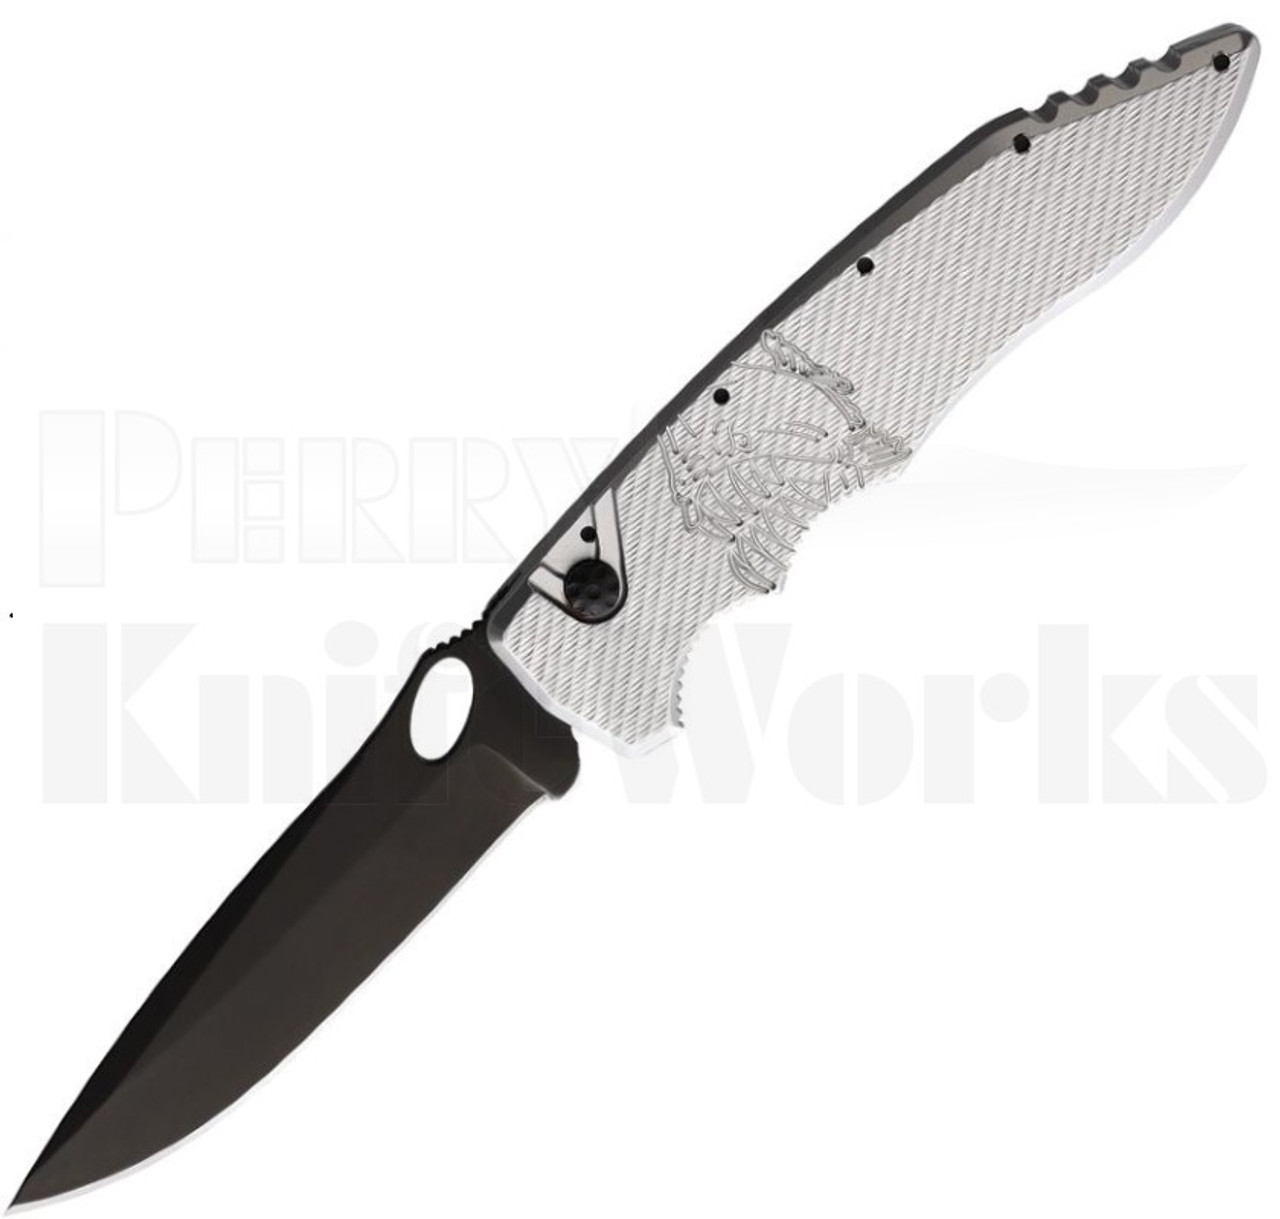 Piranha Mini Predator Automatic Knife Silver P-11 l Tactical Black l For Sale